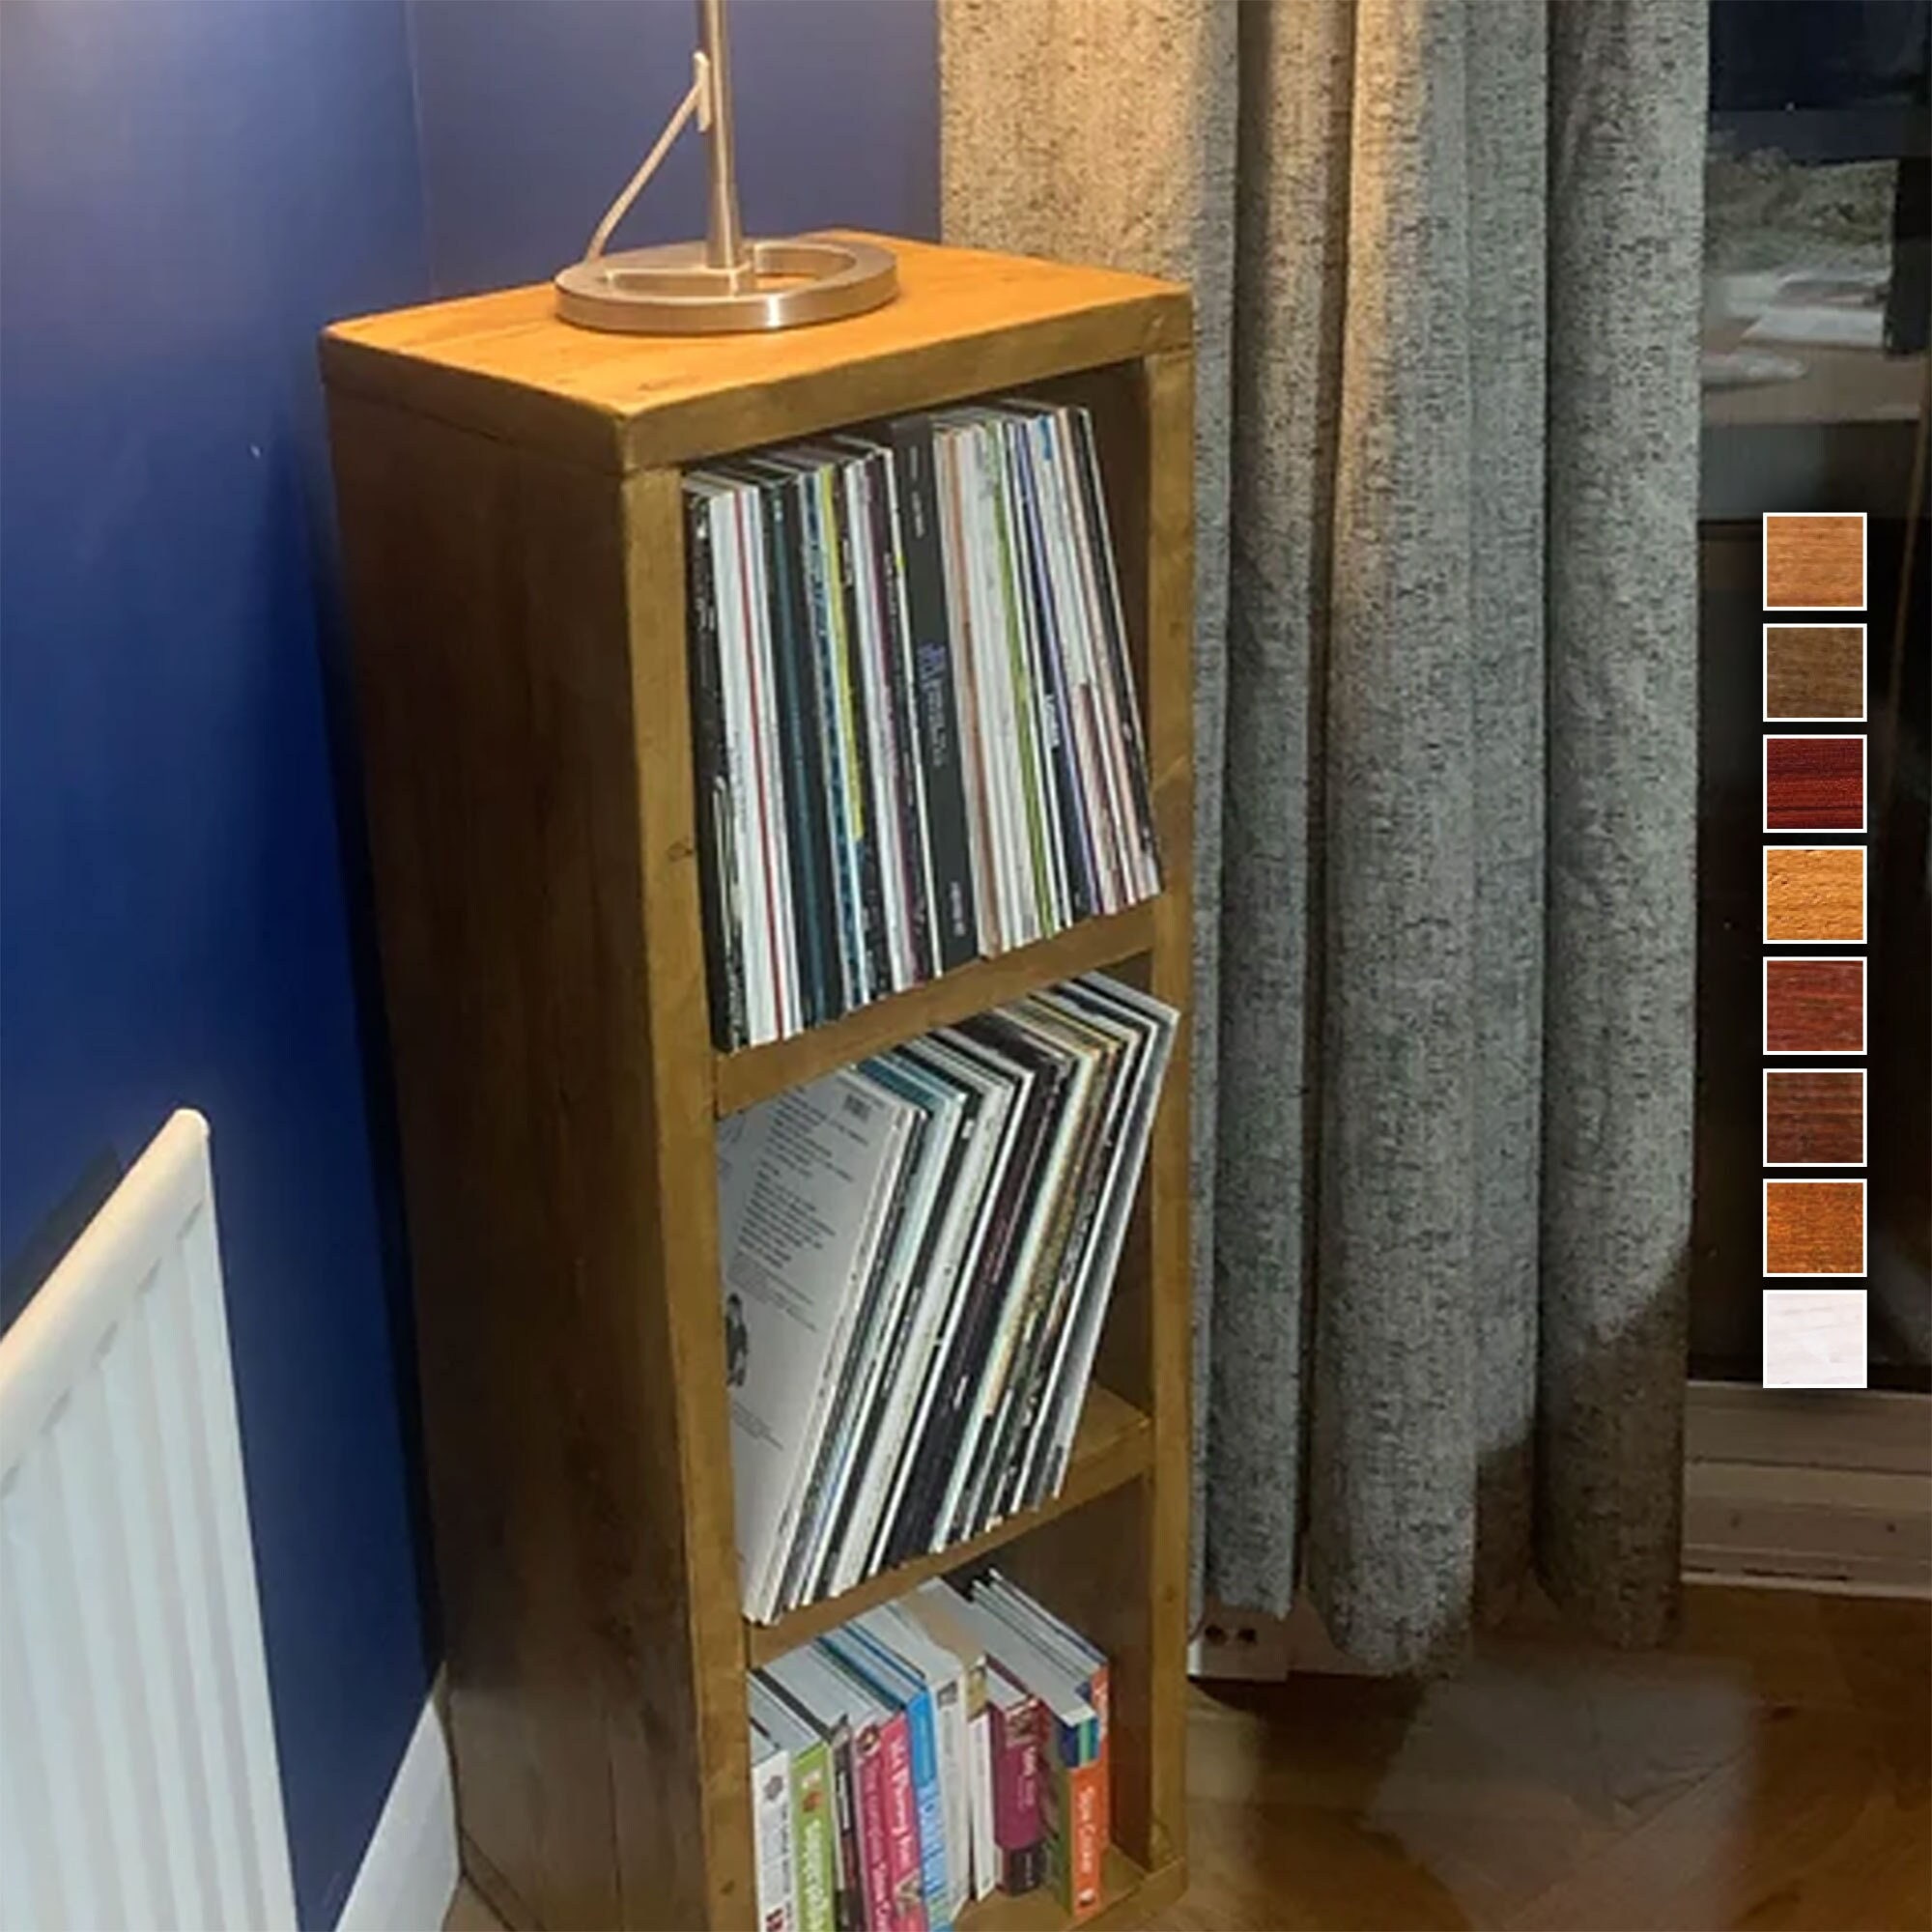 Rolling Vinyl Record Stand Storage Rack 2Tier LP Record Album Book Holder  Shelf